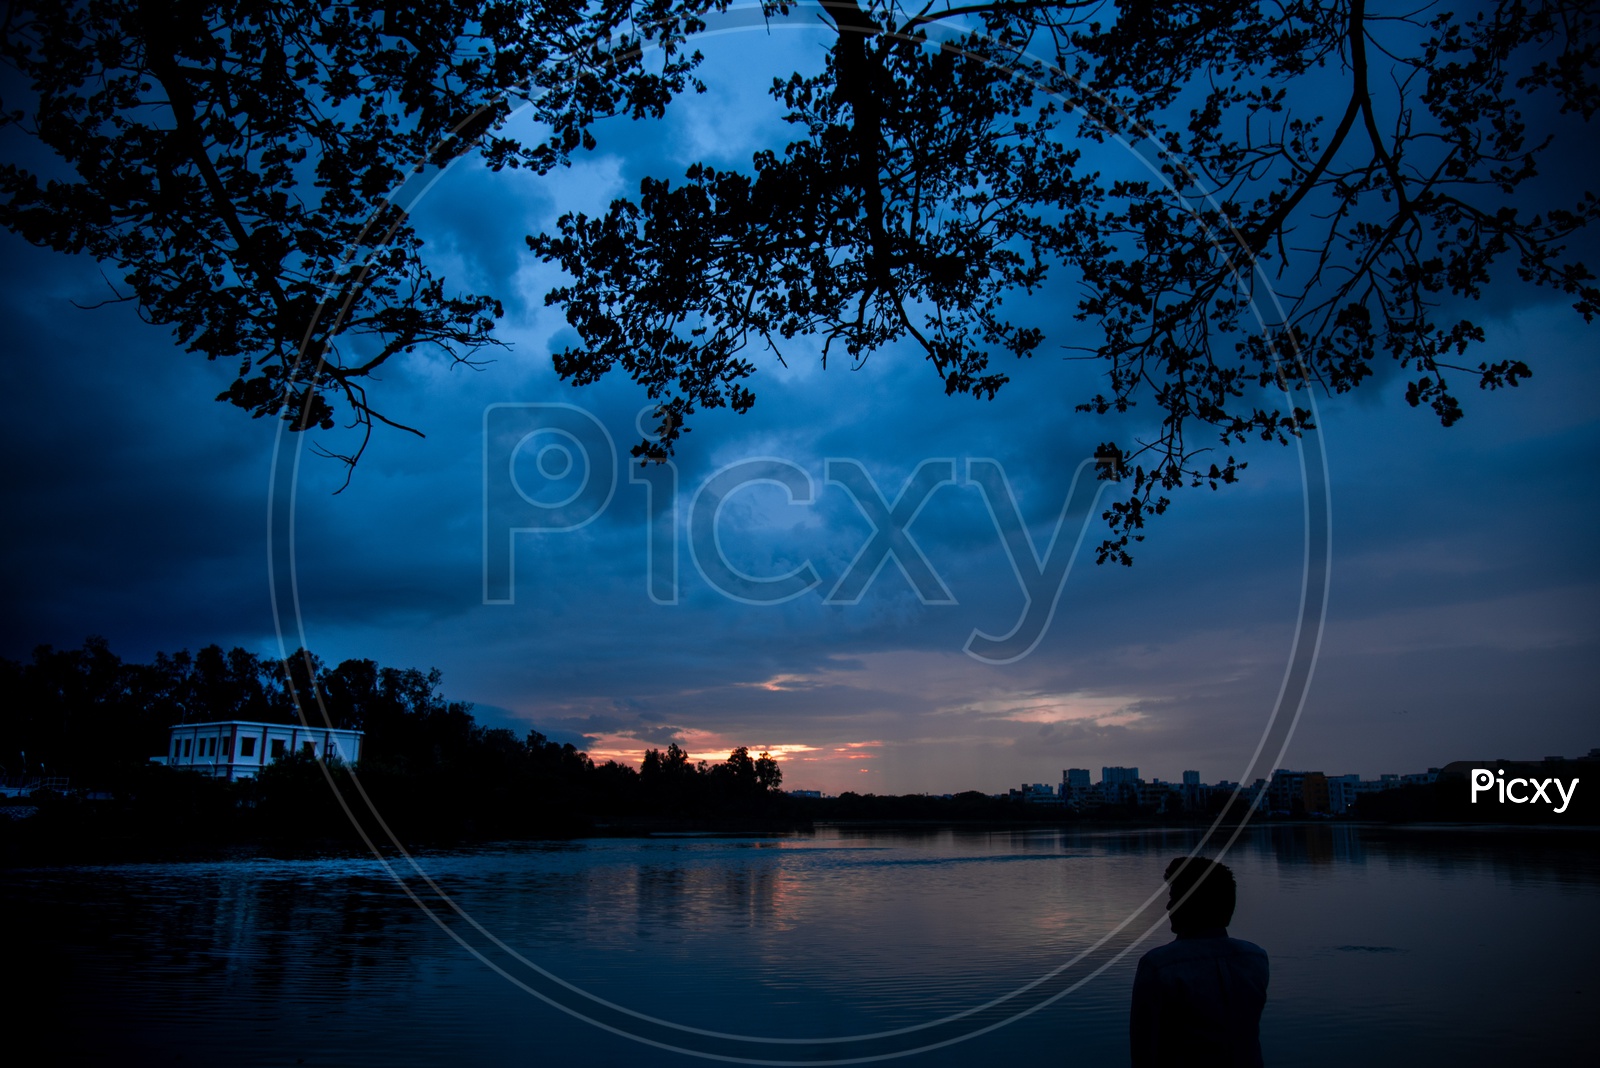 Sunset View at IDL Lake, Hyderabad